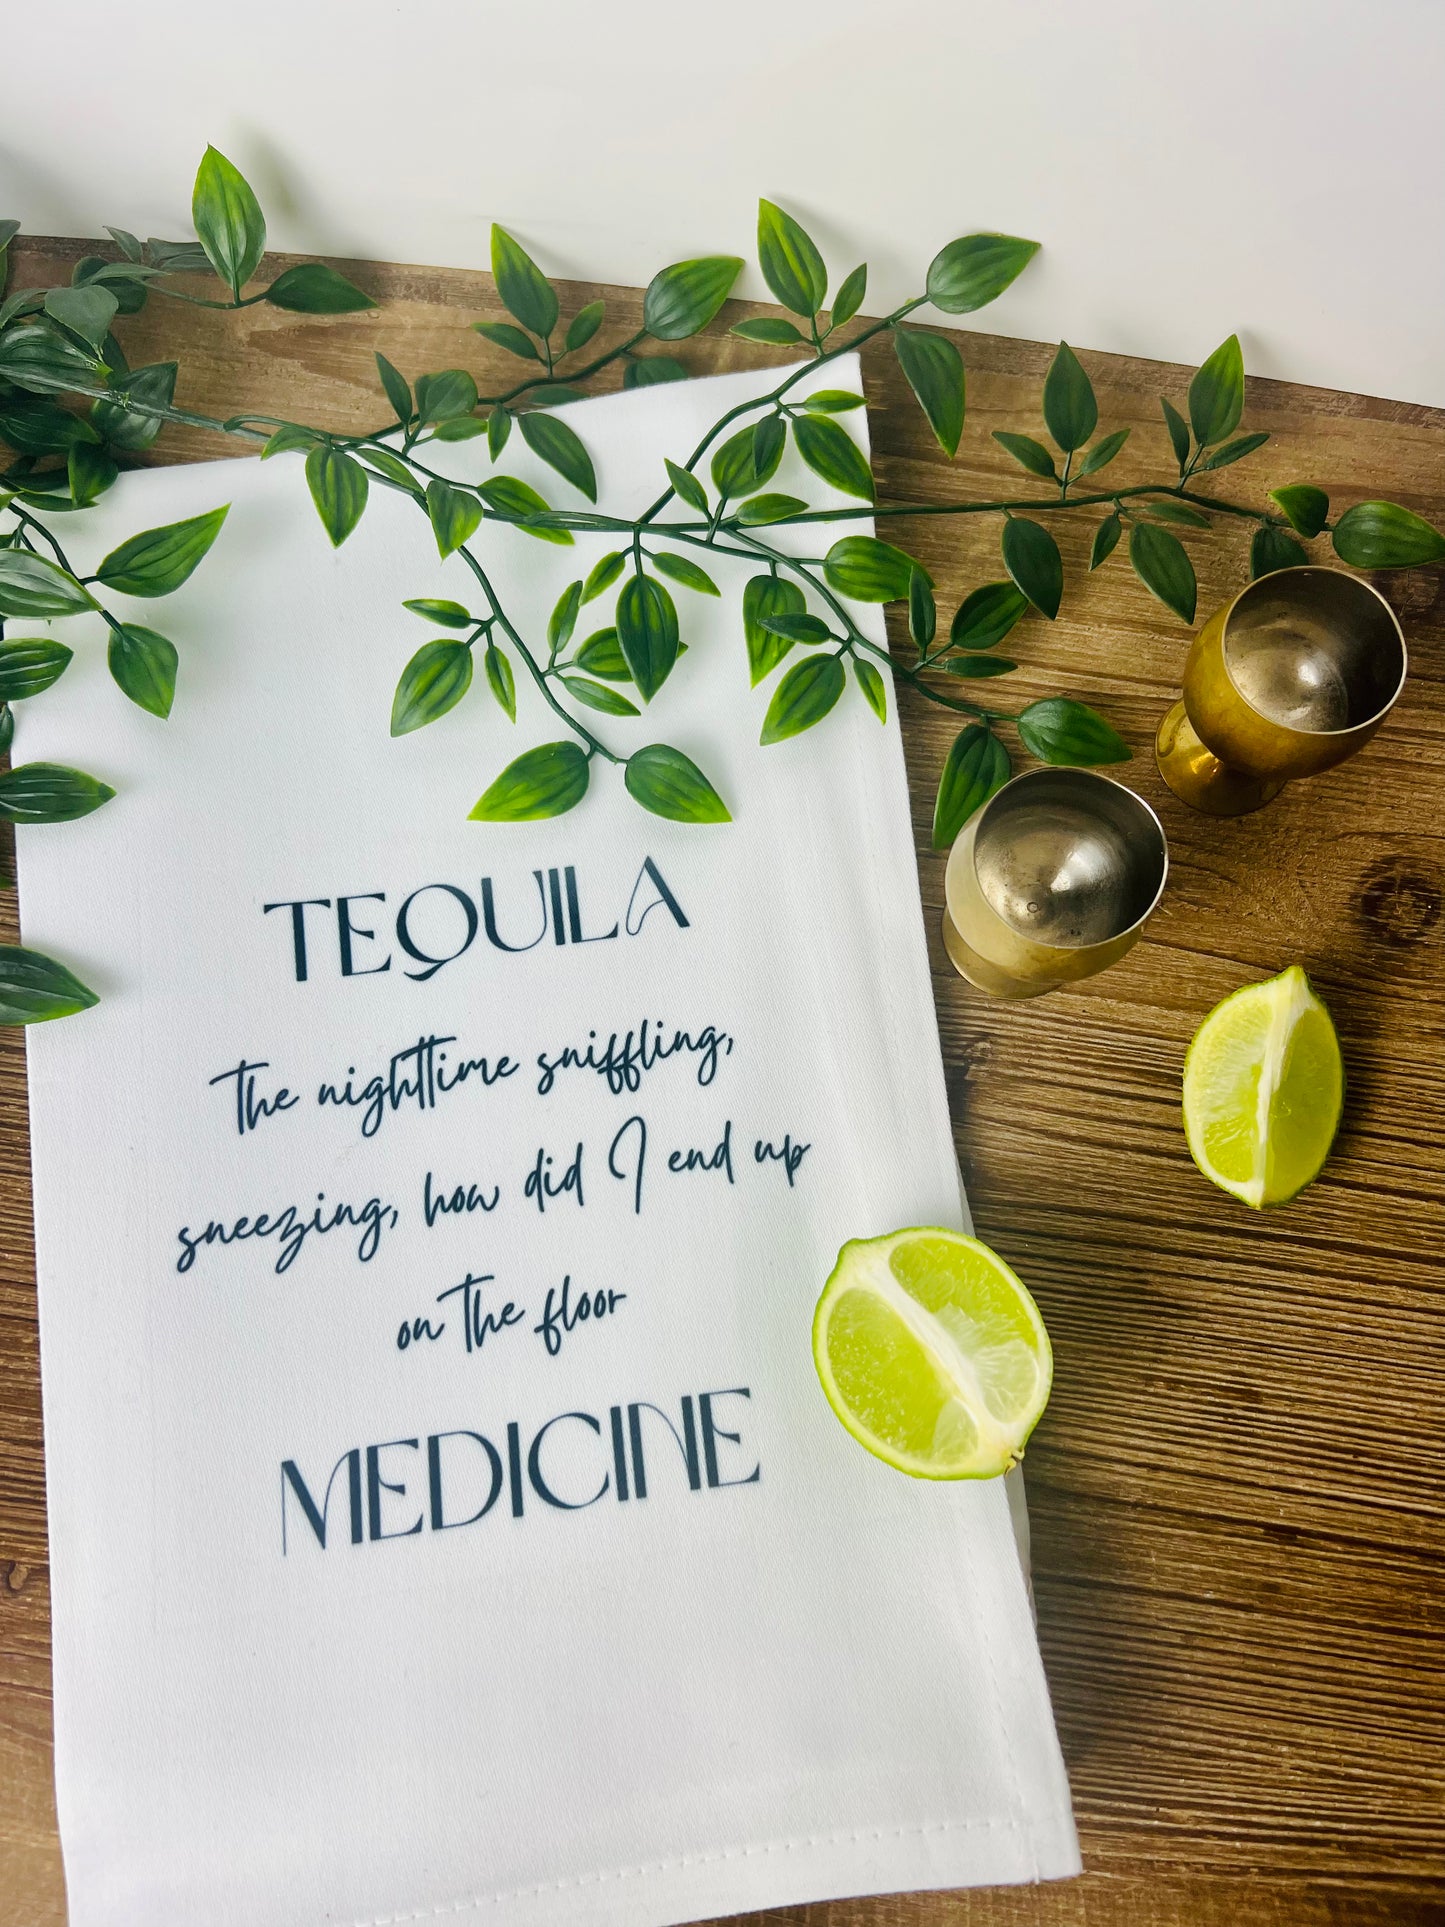 Tequila Medicine Towel